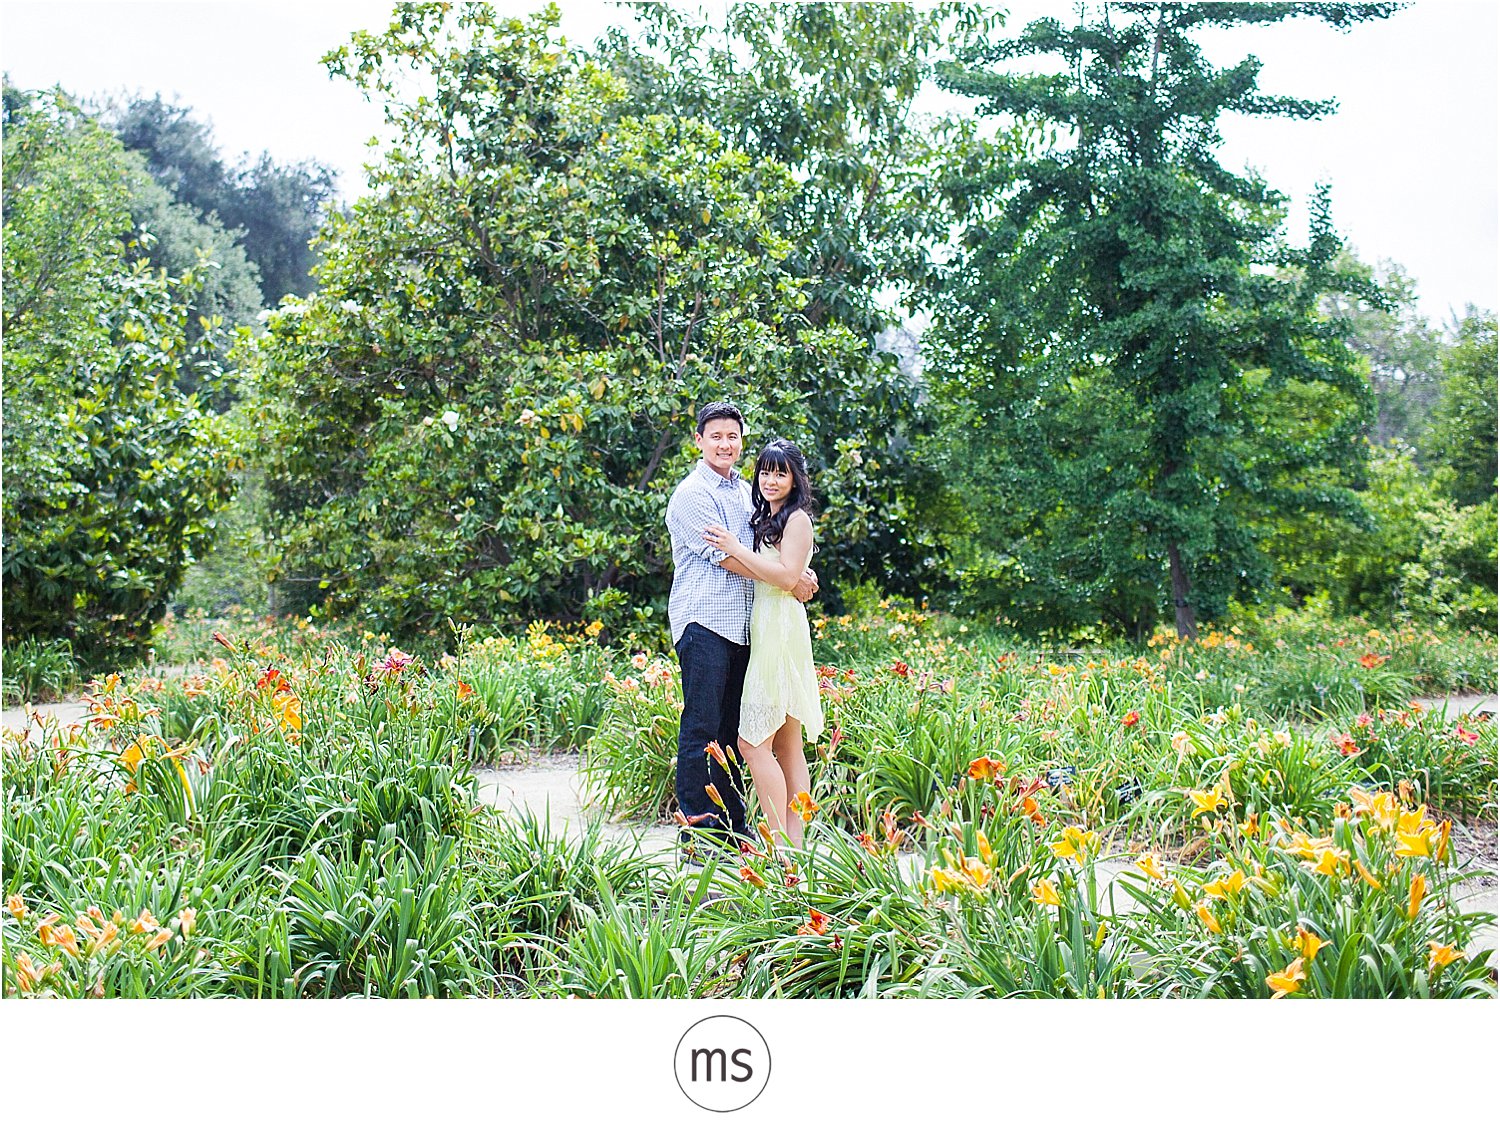 Jen & Eric Arcadia Arboretum Engagement Portraits - Margarette Sia Photography_0025